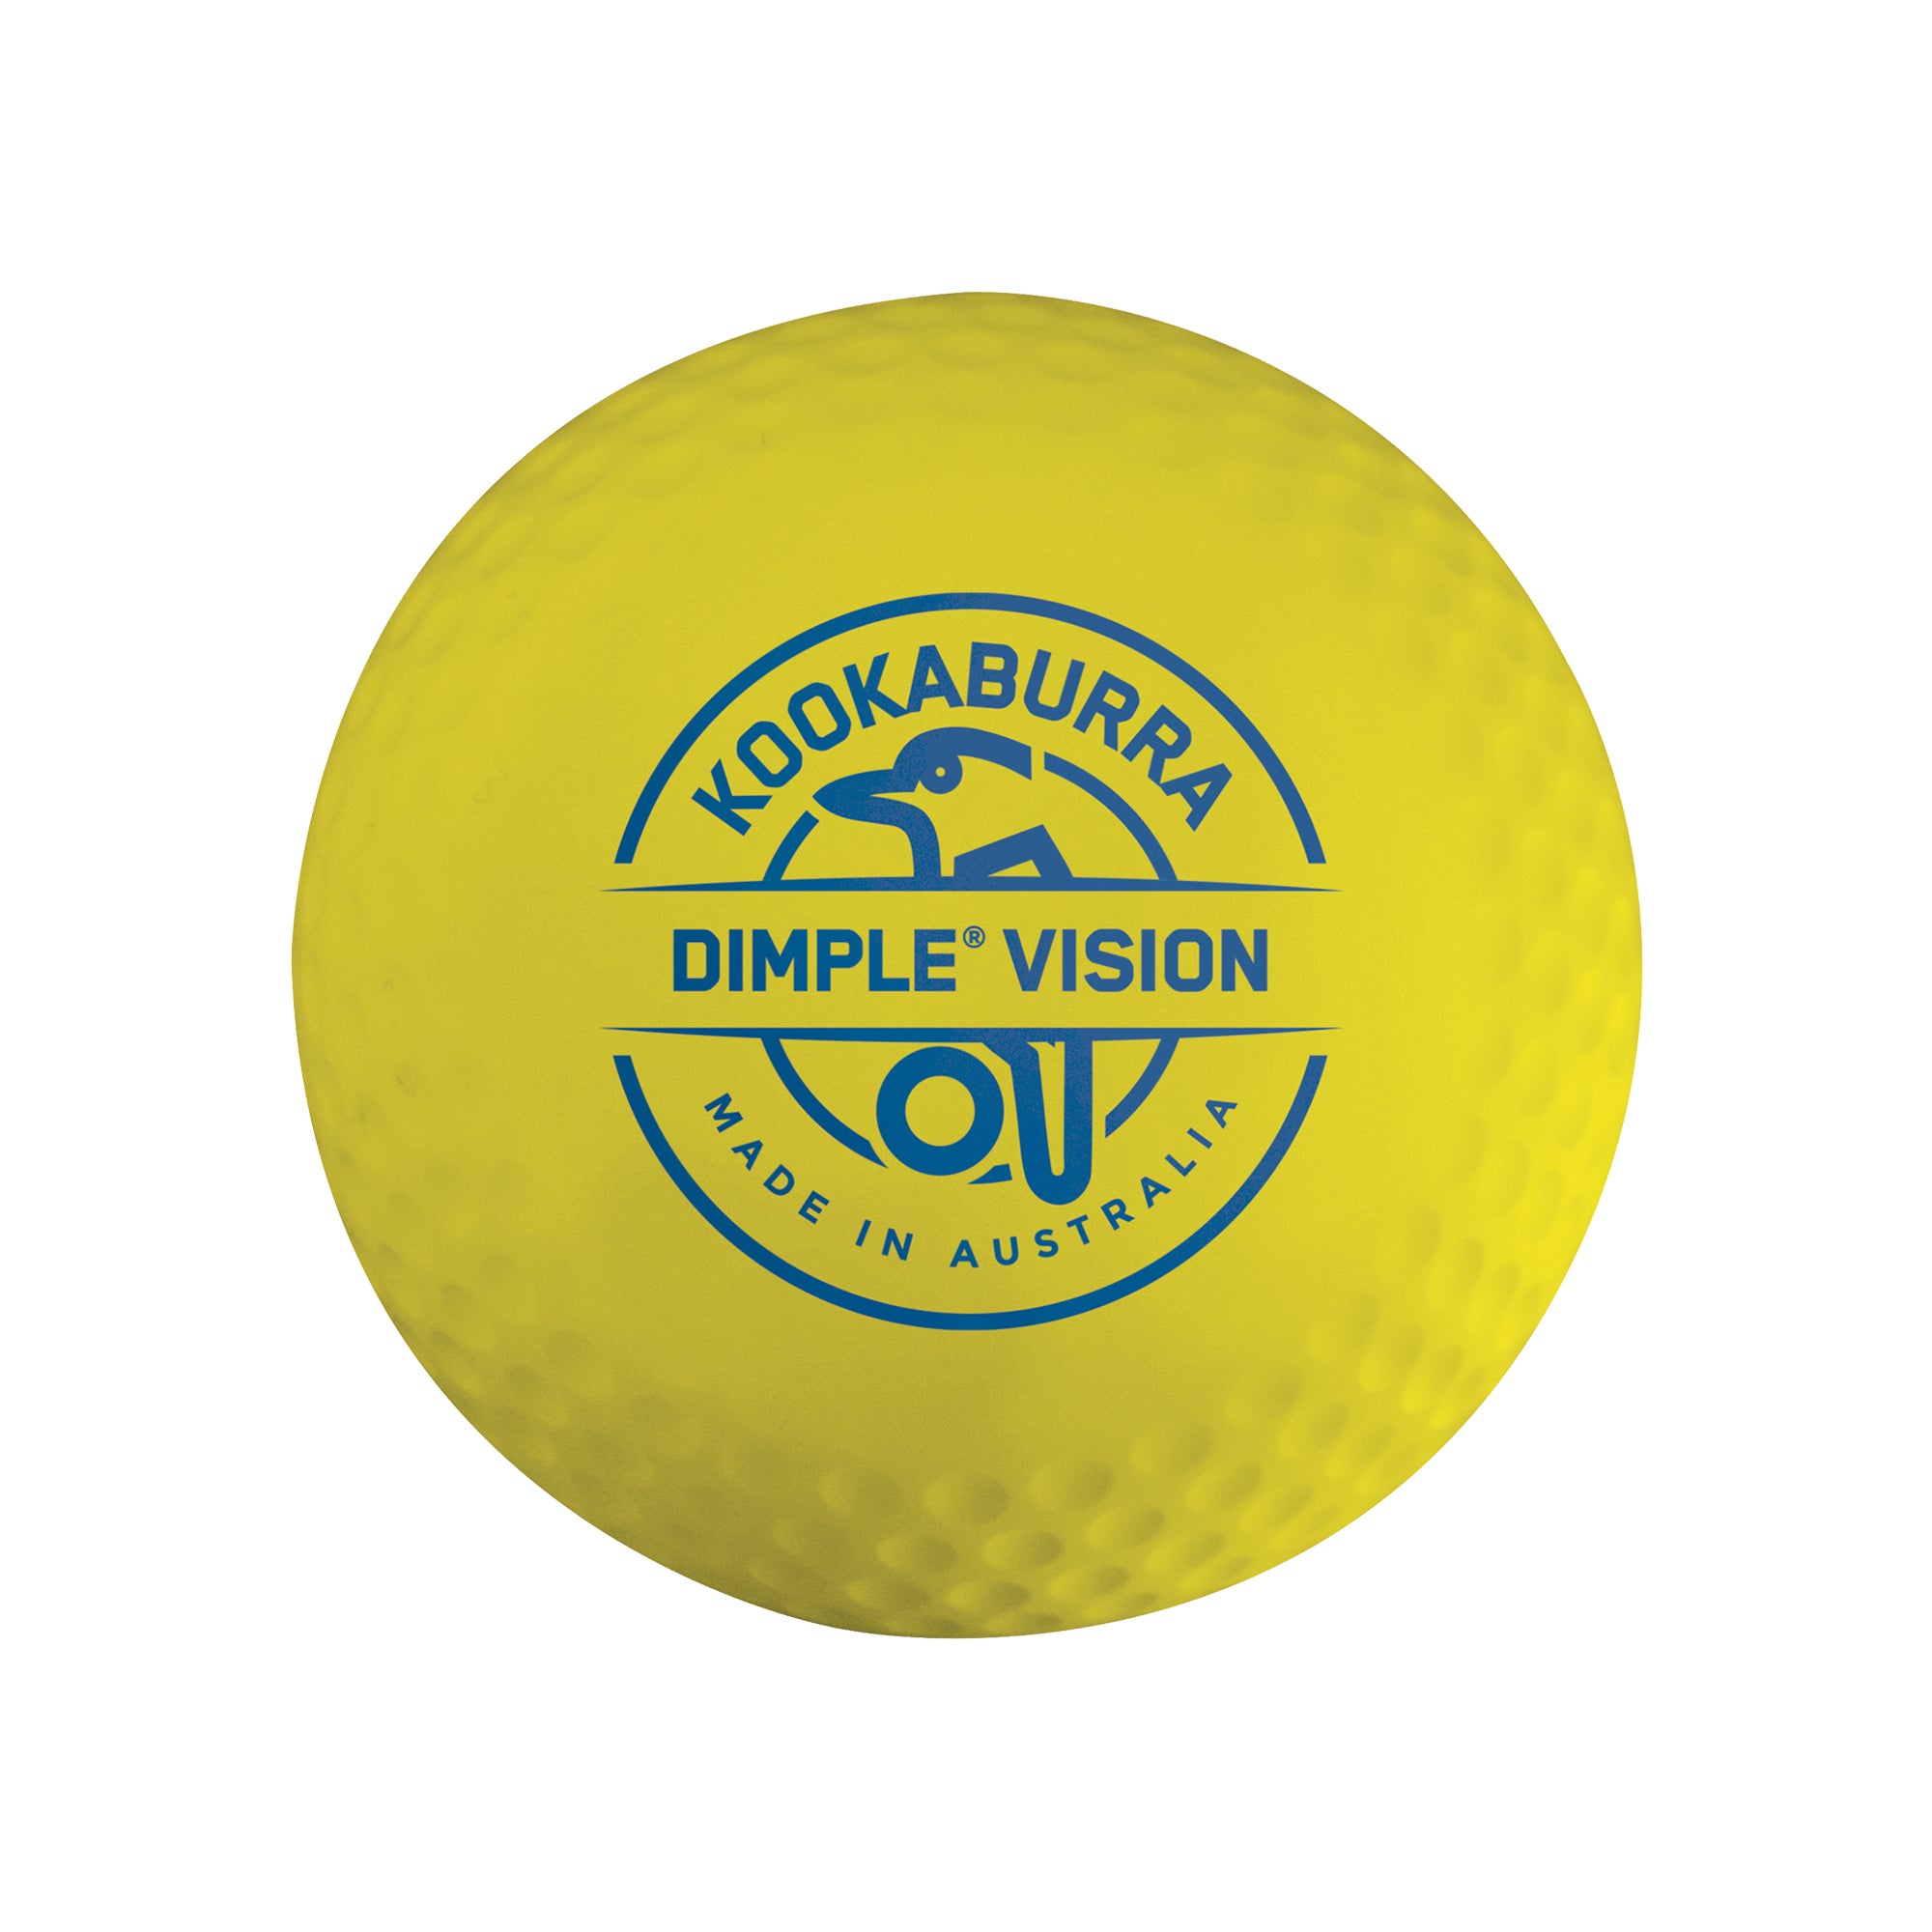 Kookaburra Dimple Vision Hockey Ball - Yellow